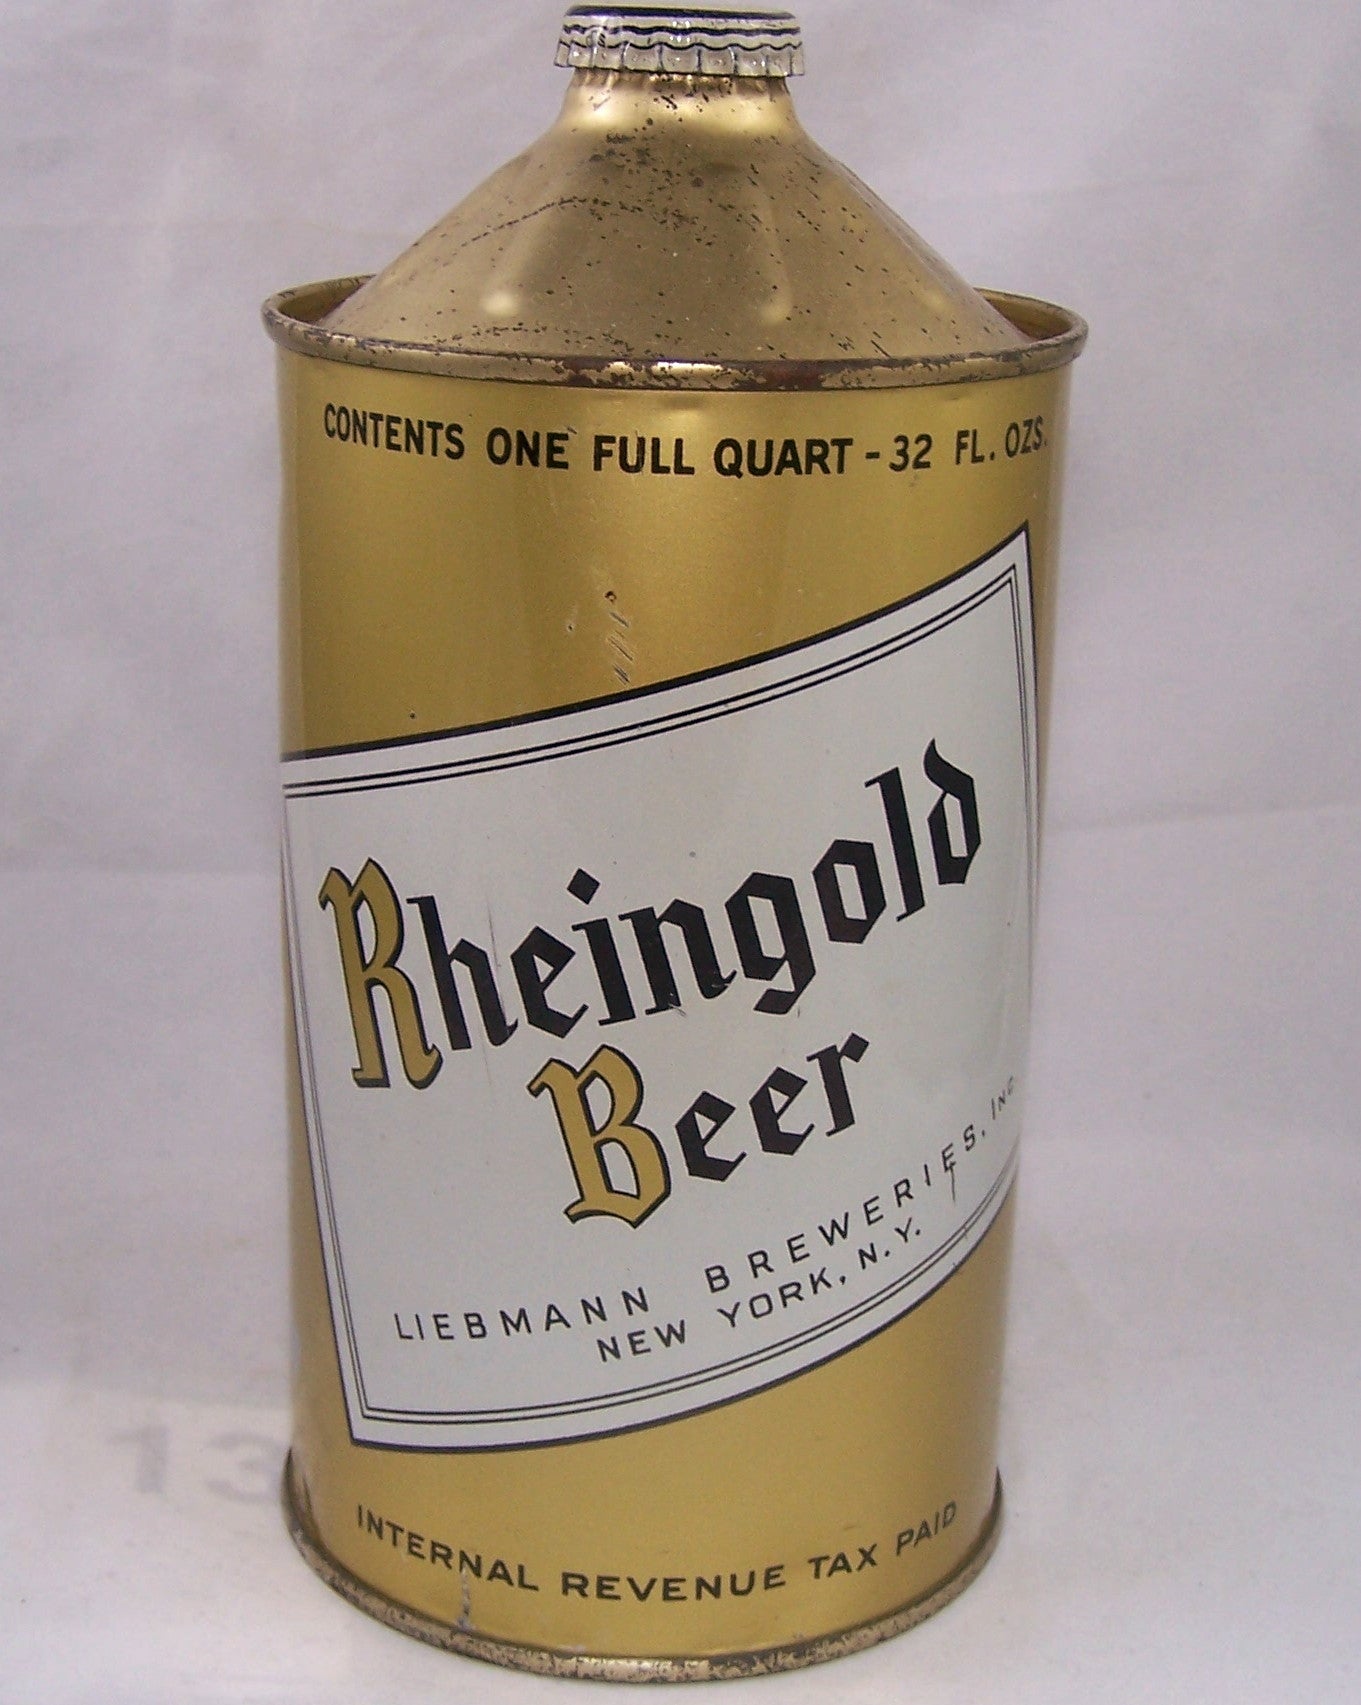 Rheingold Beer, USBC 218-08, Grade 1 Sold on 08/26/17